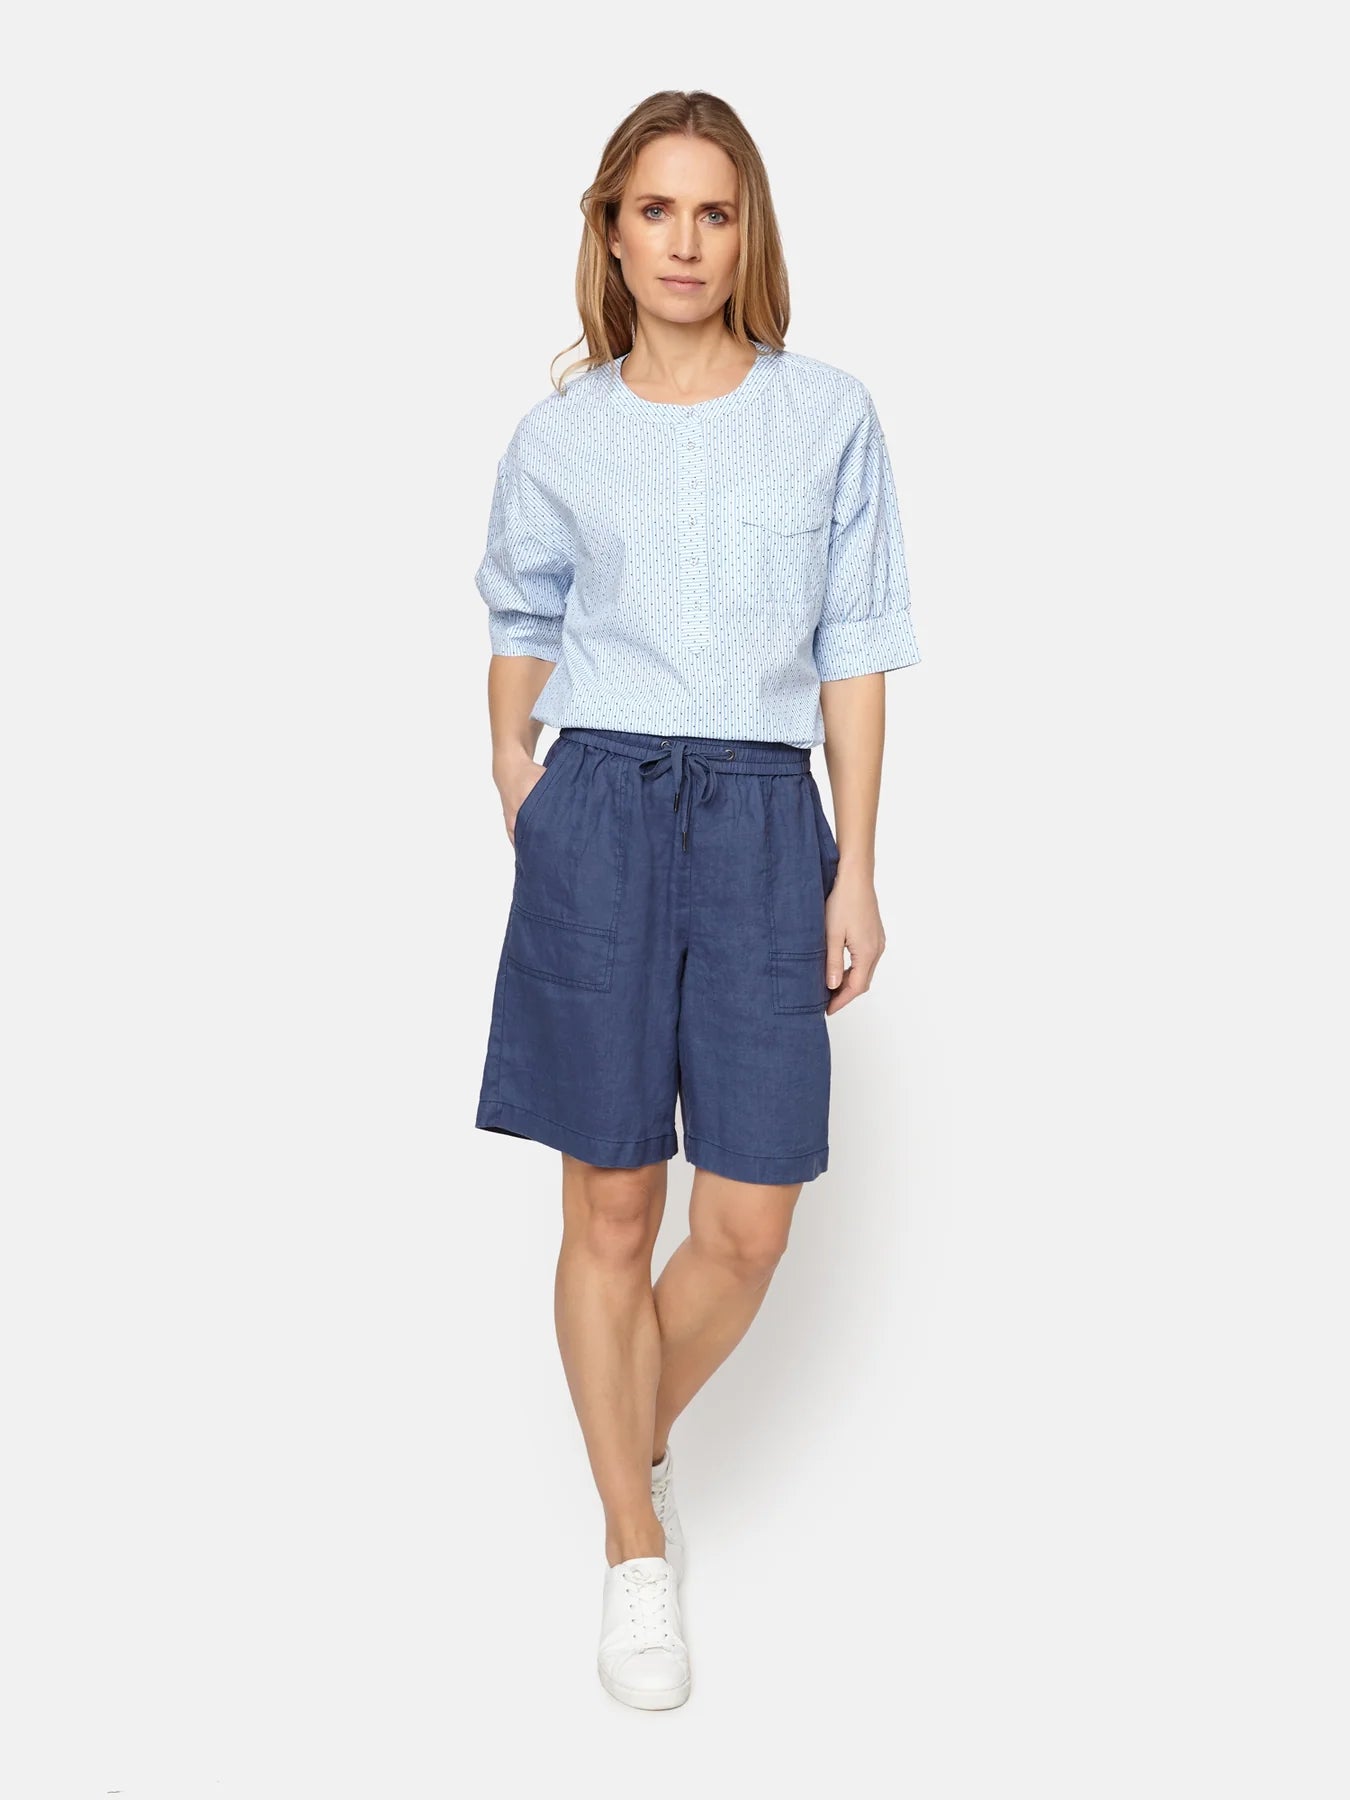 B. Coastline Linen Shorts